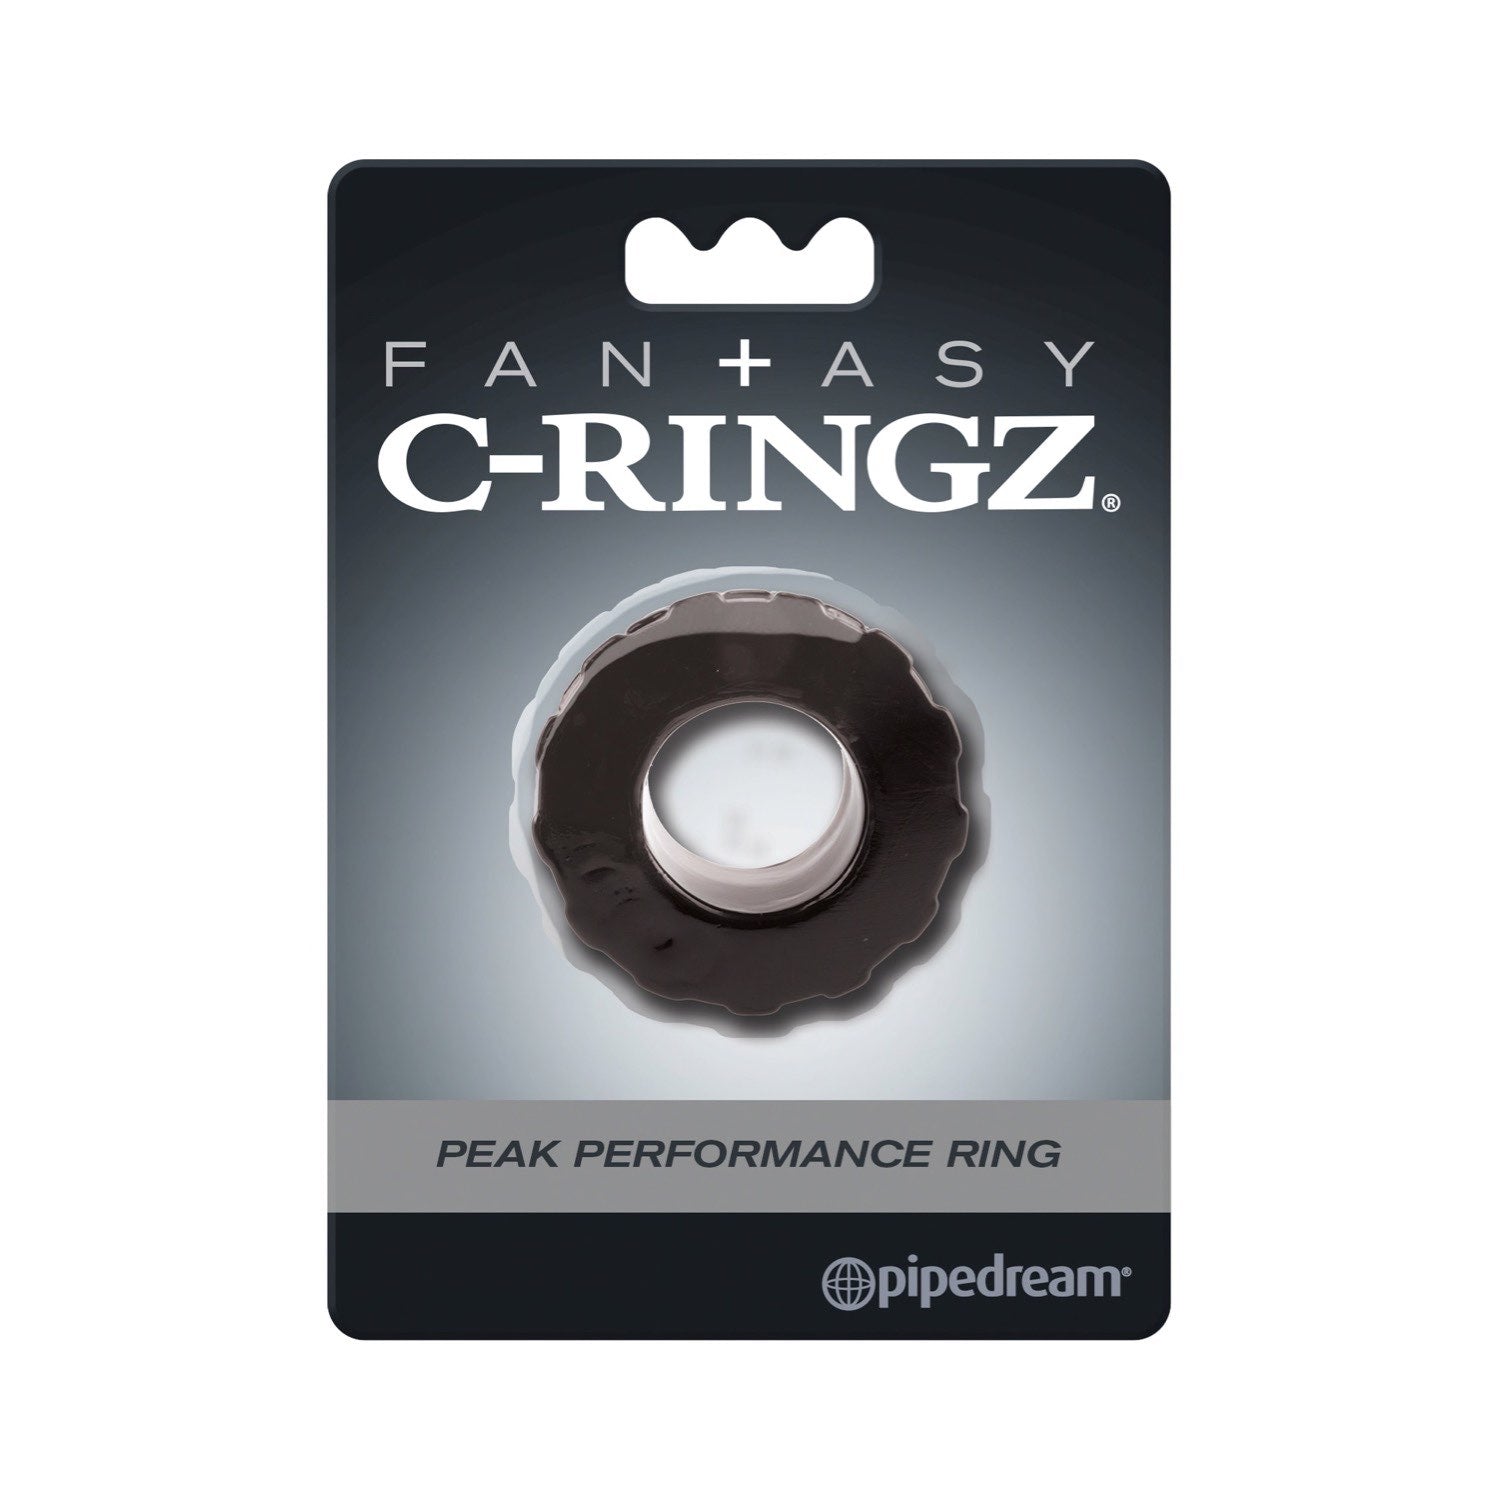 Fantasy C-Ringz Peak Performance Ring - Black Cock Ring by Pipedream